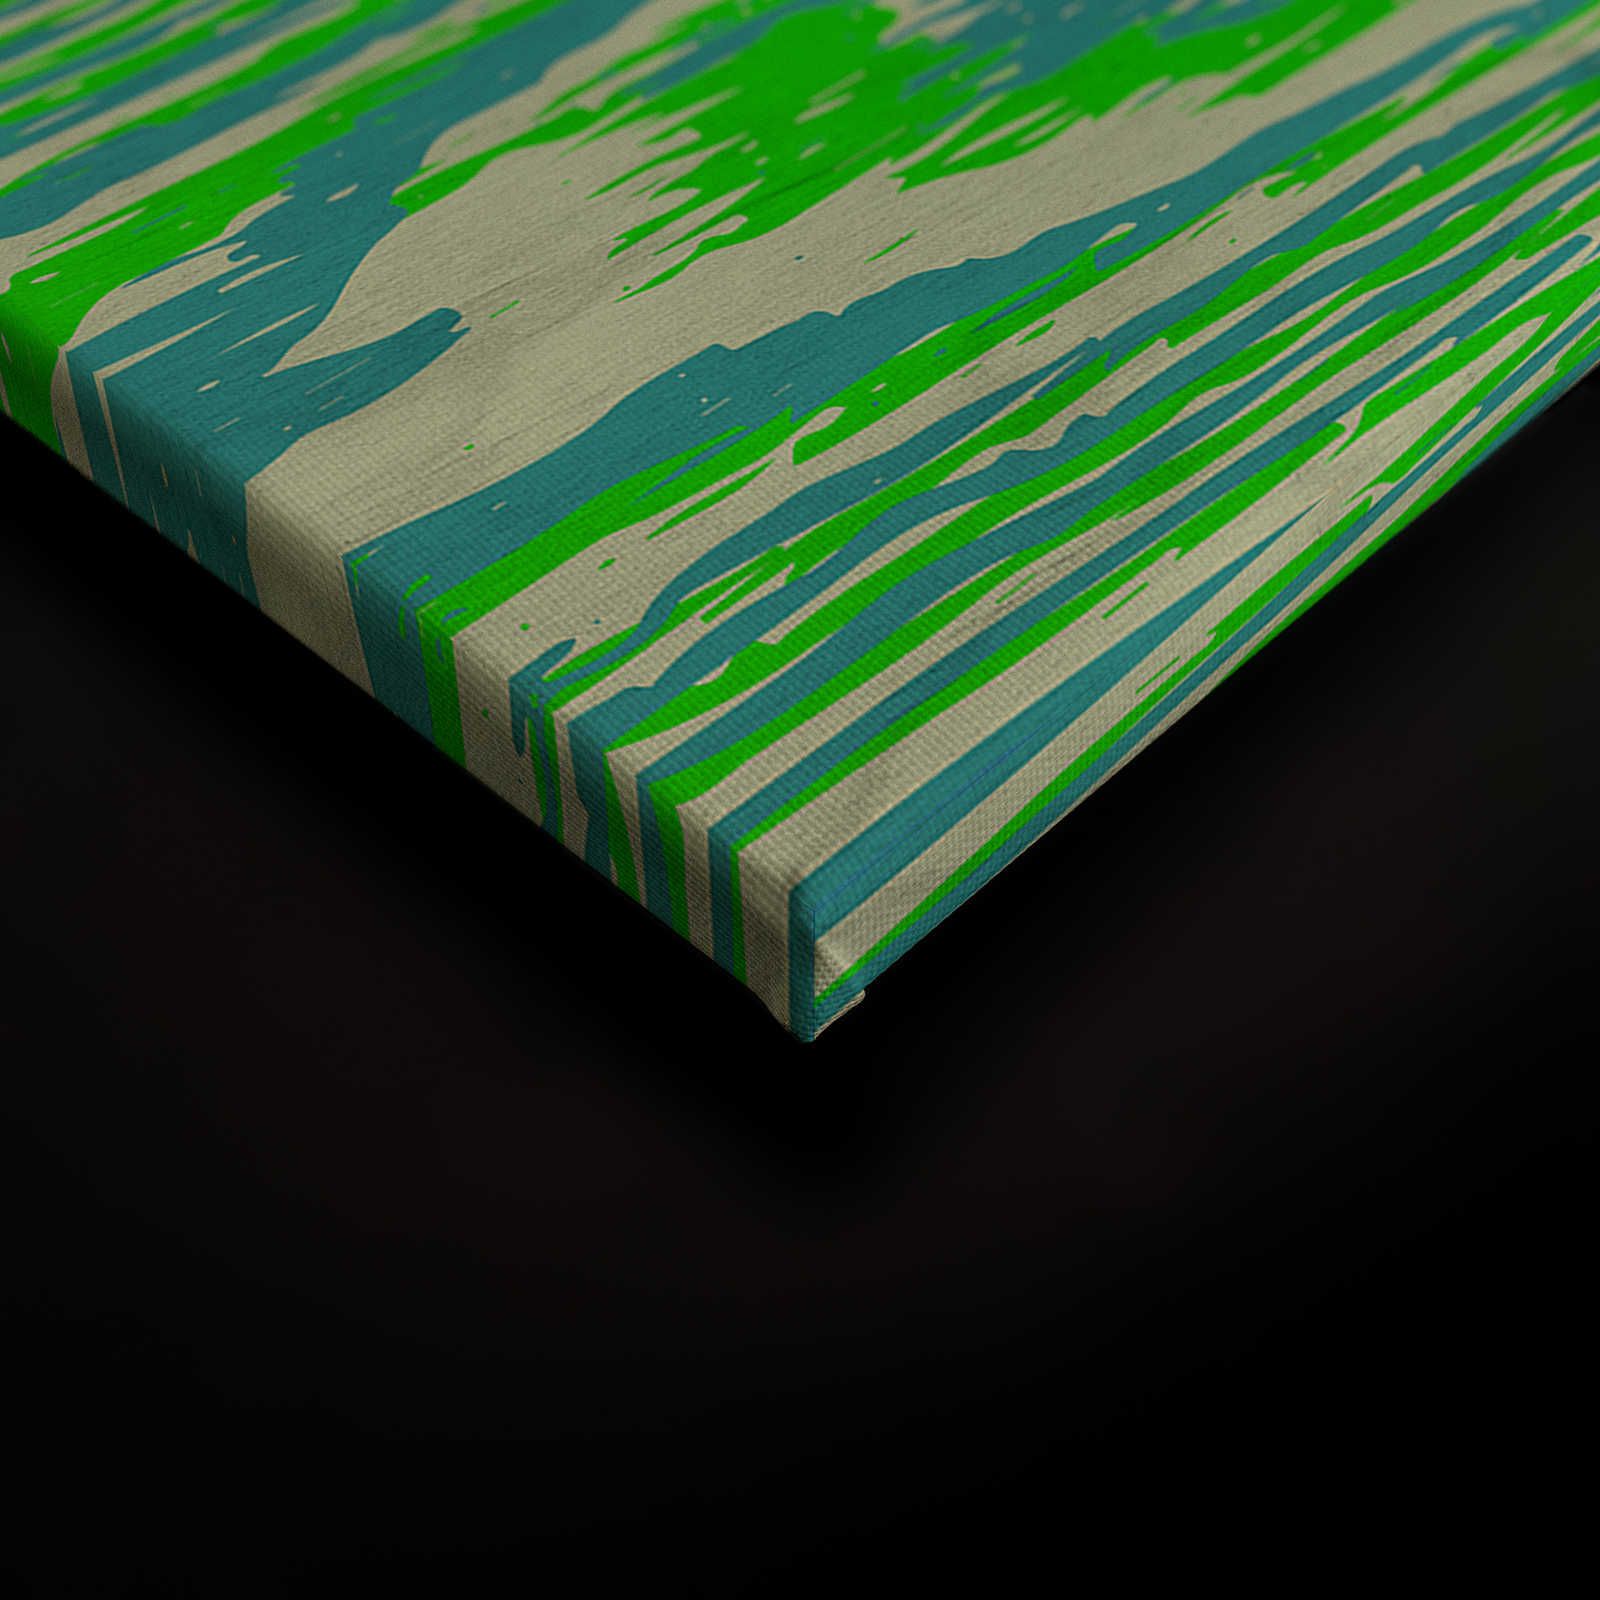             Bounty 1 - Toile vert fluo imitation bois Style - 0,90 m x 0,60 m
        